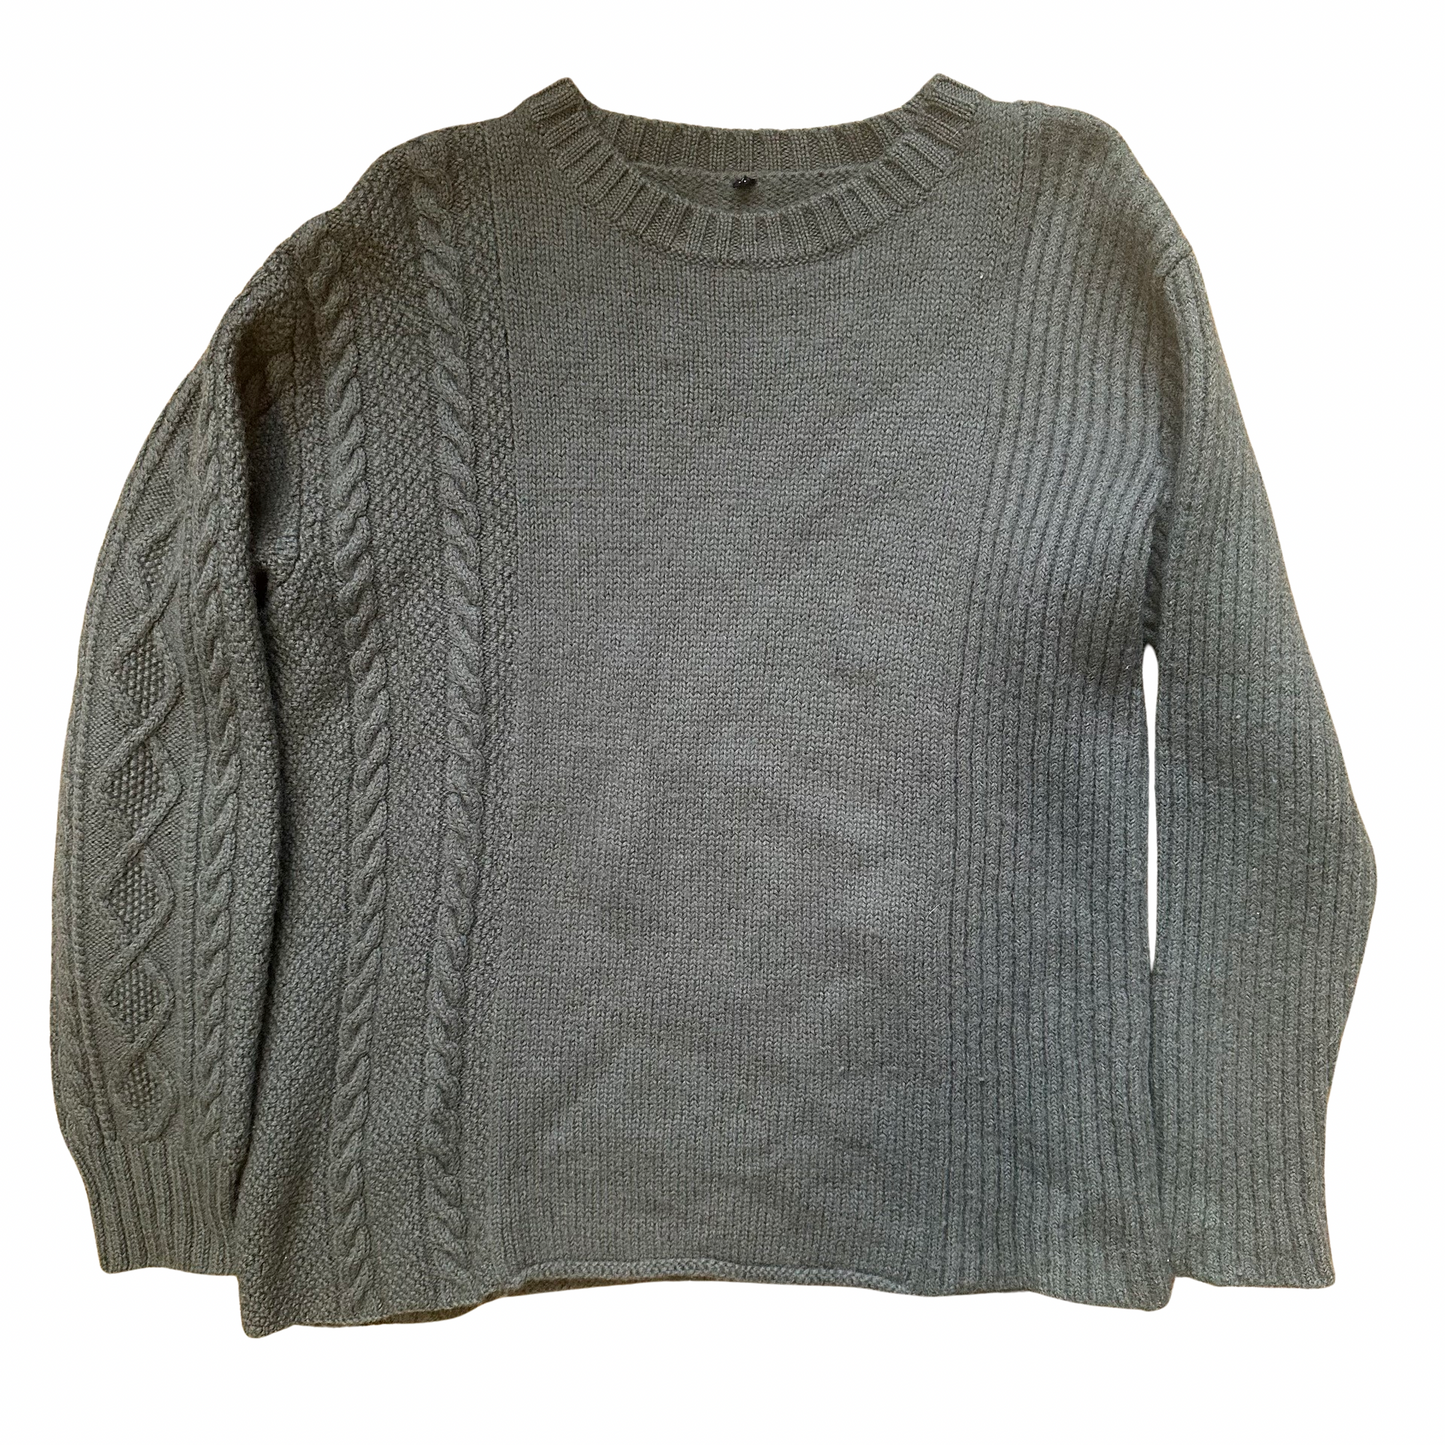 Undercover Asymmetric Sweater AW98 Sz Medium